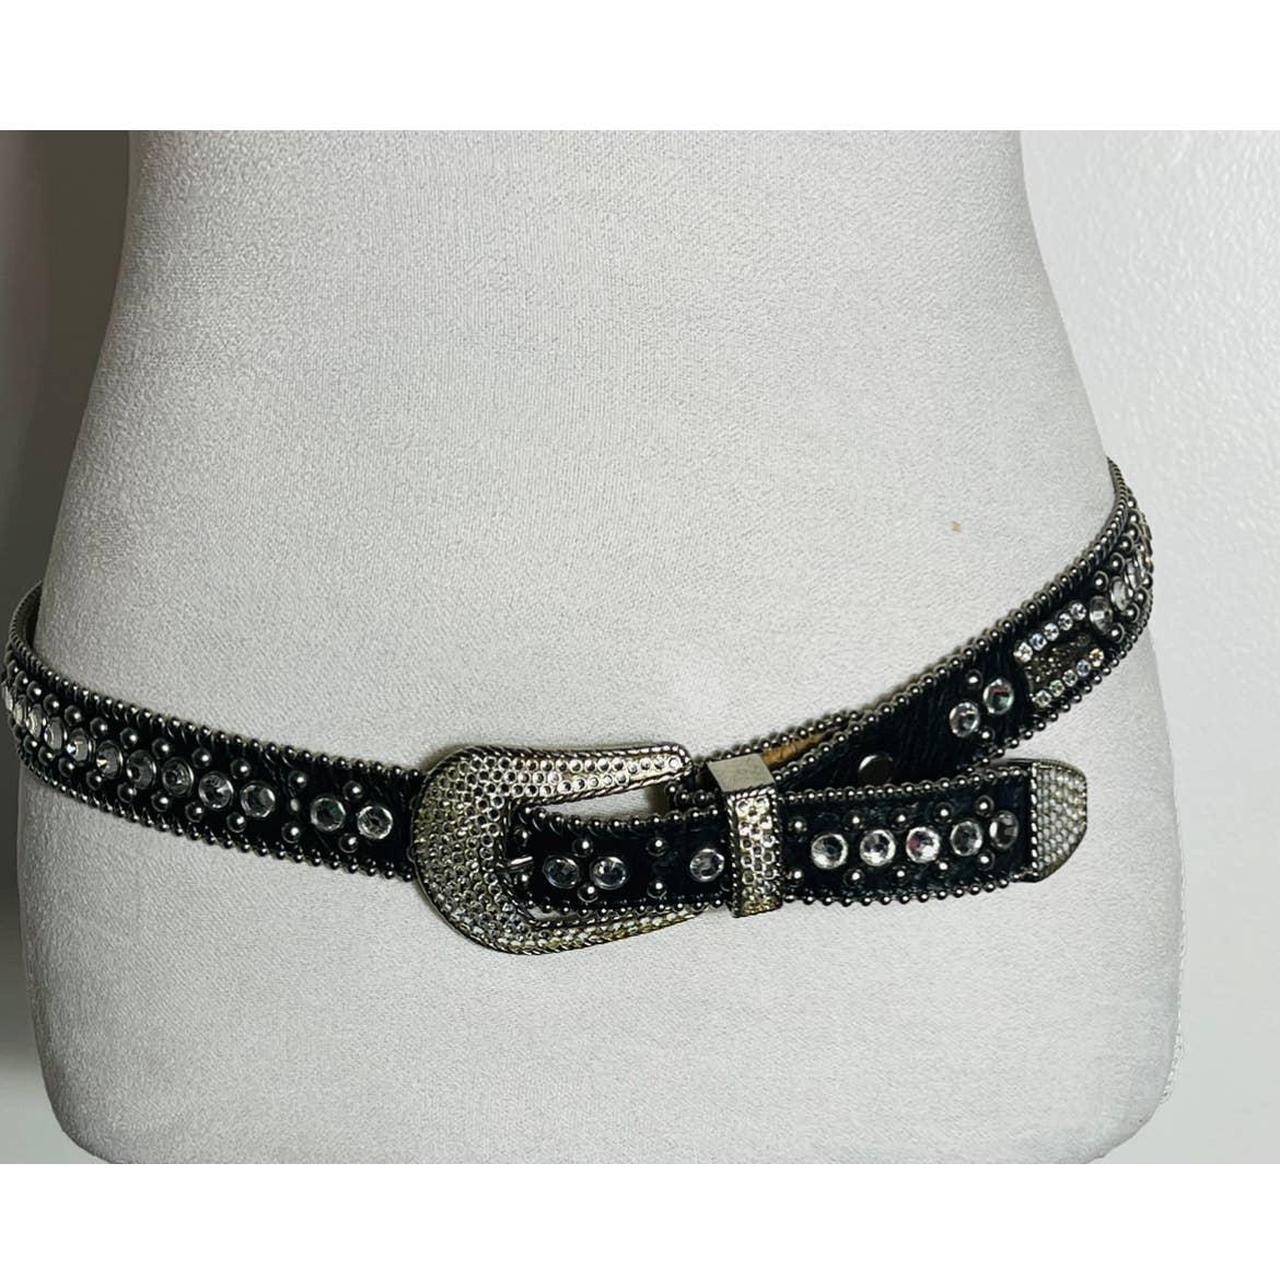 Leather belt BB SIMON Black size S International in Leather - 28862096